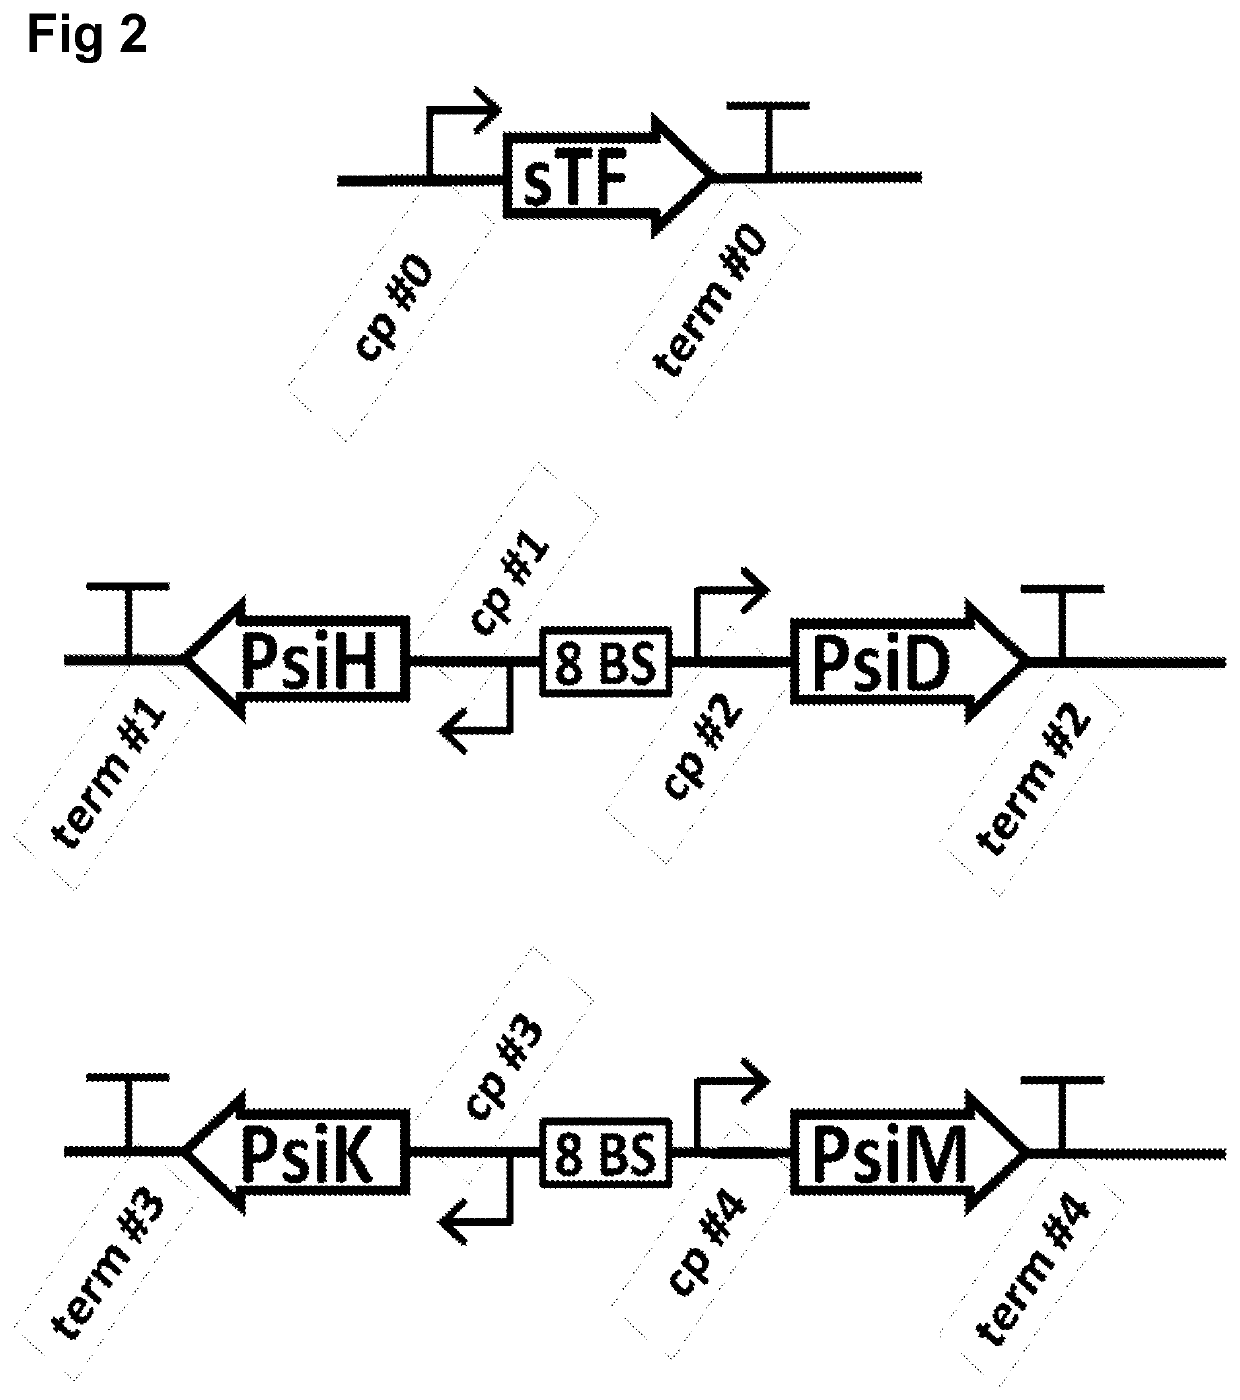 Heterologous production of psilocybin